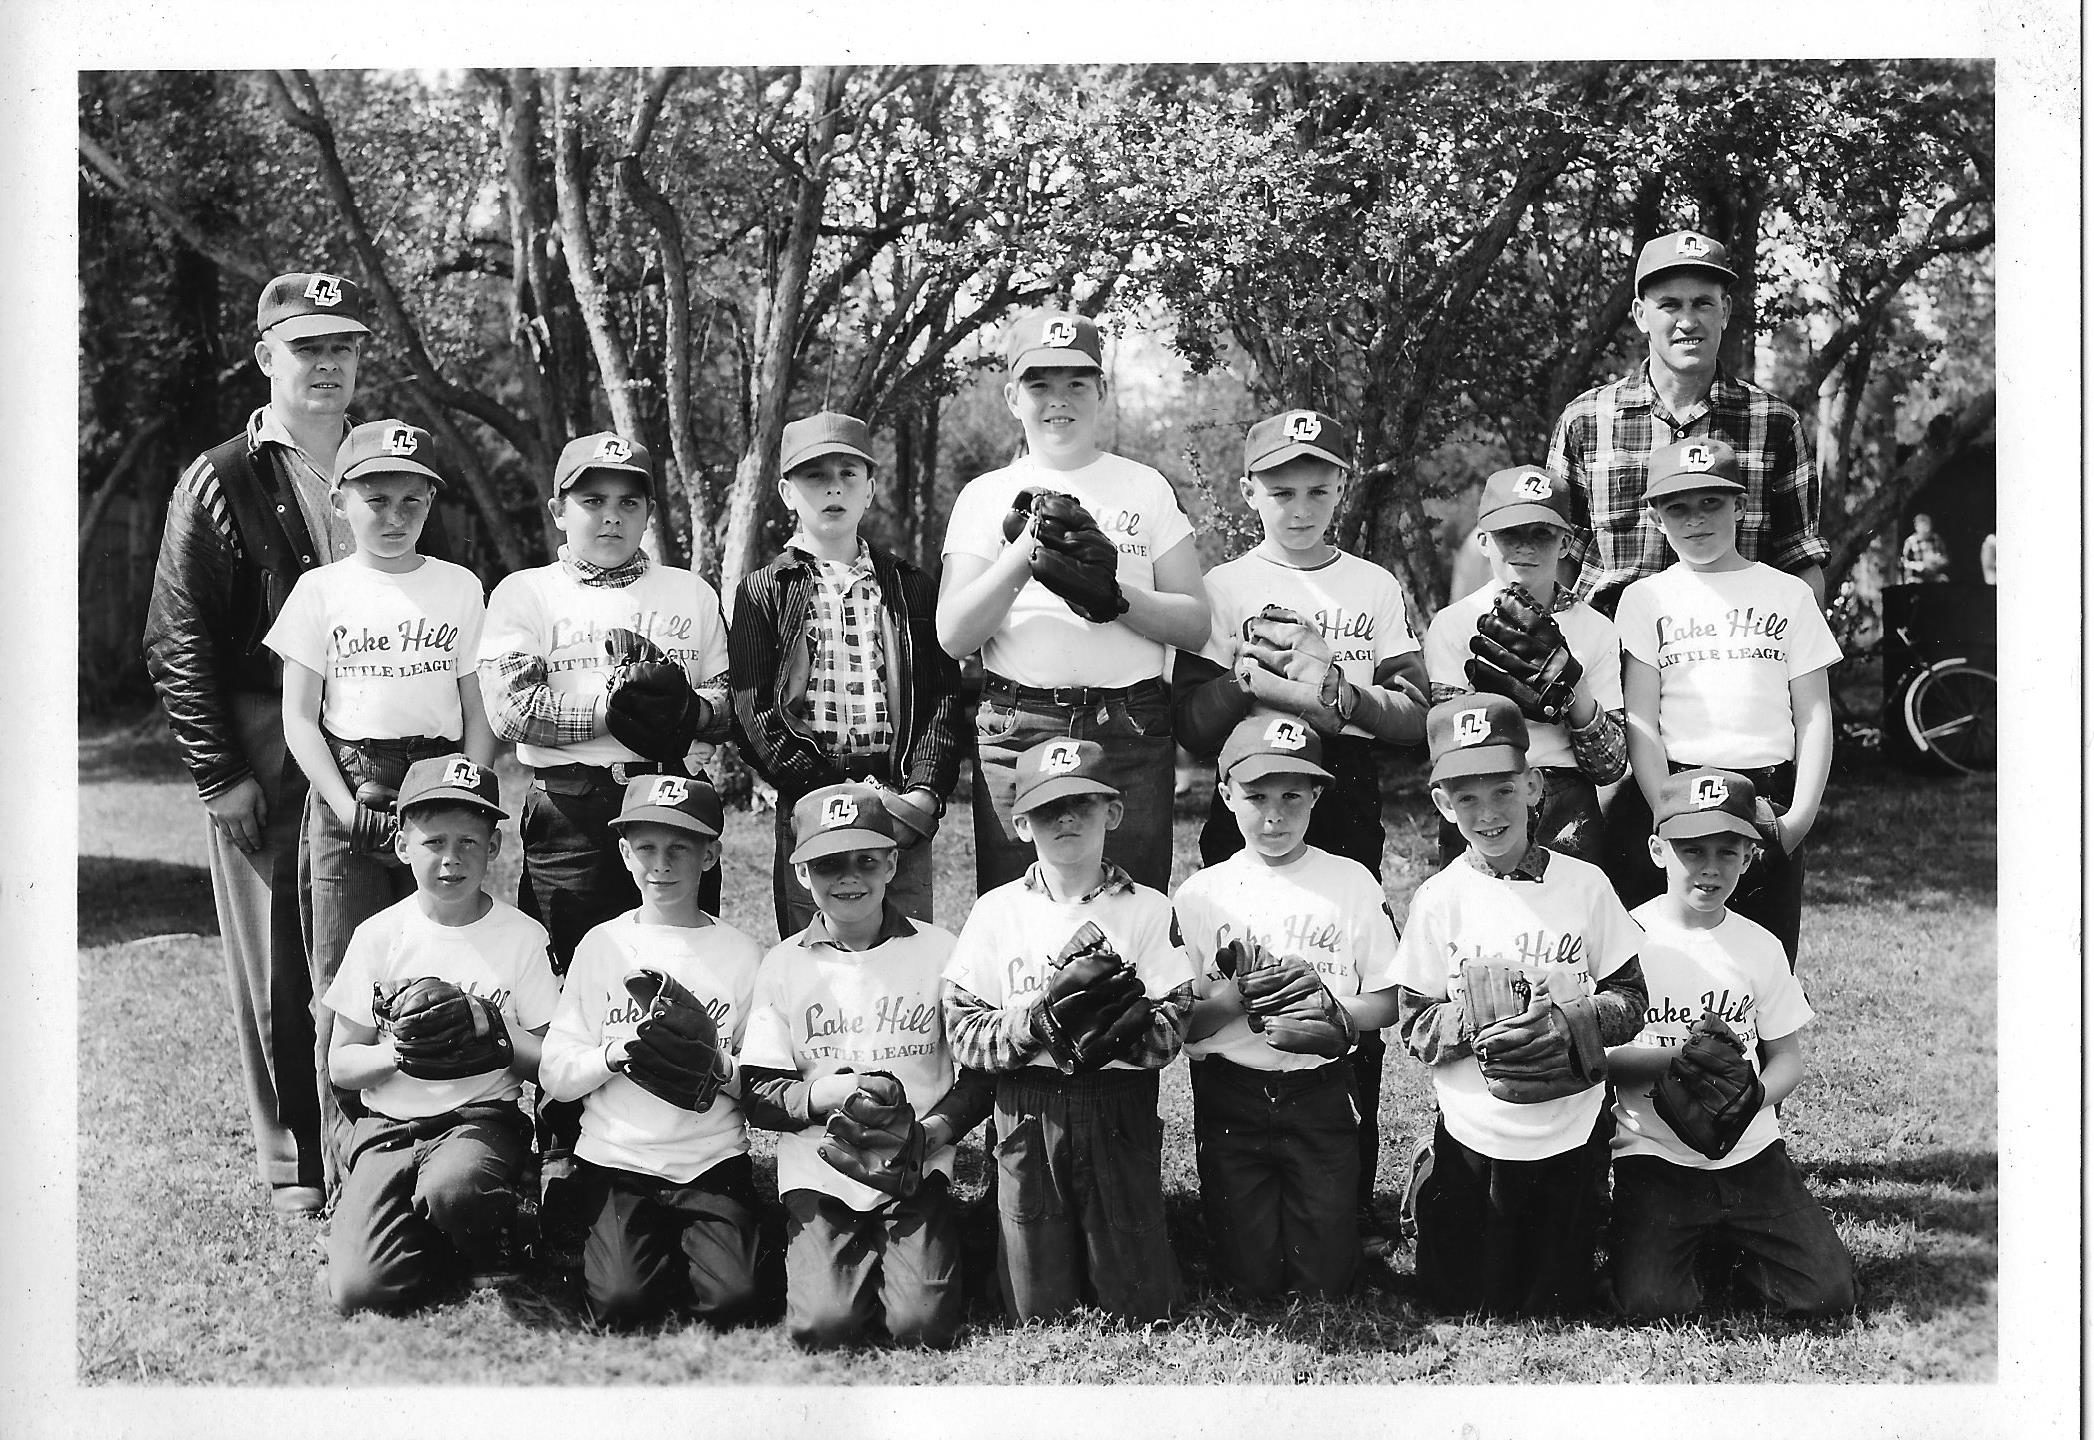 Lakehill LL minors team 1950s